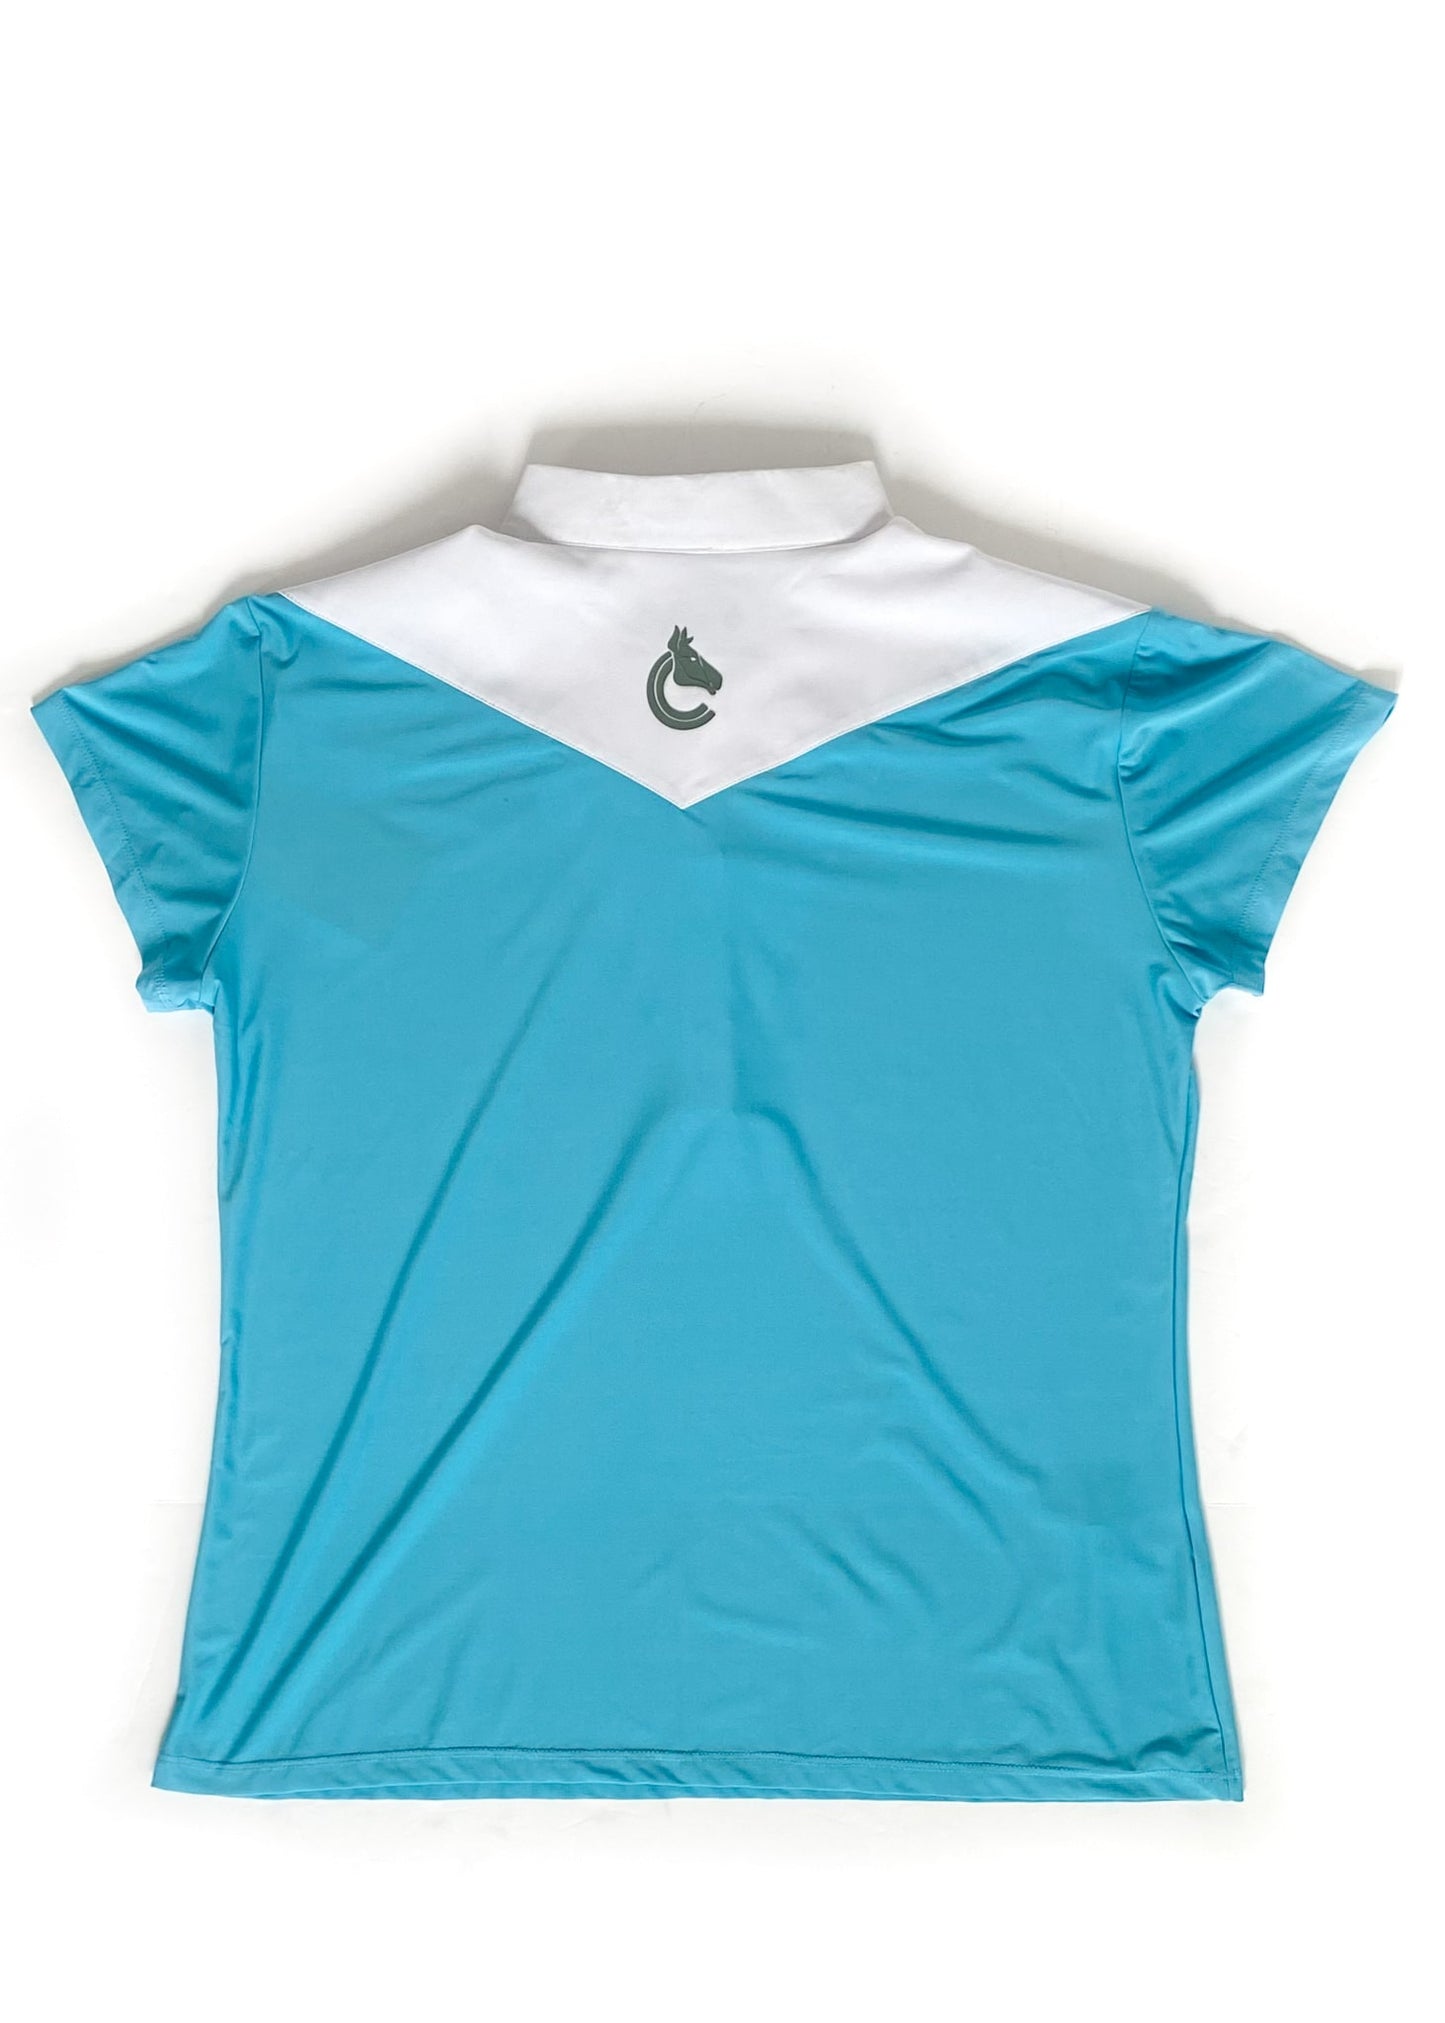 Criniere Margot Show Shirt - Baby Blue - XL